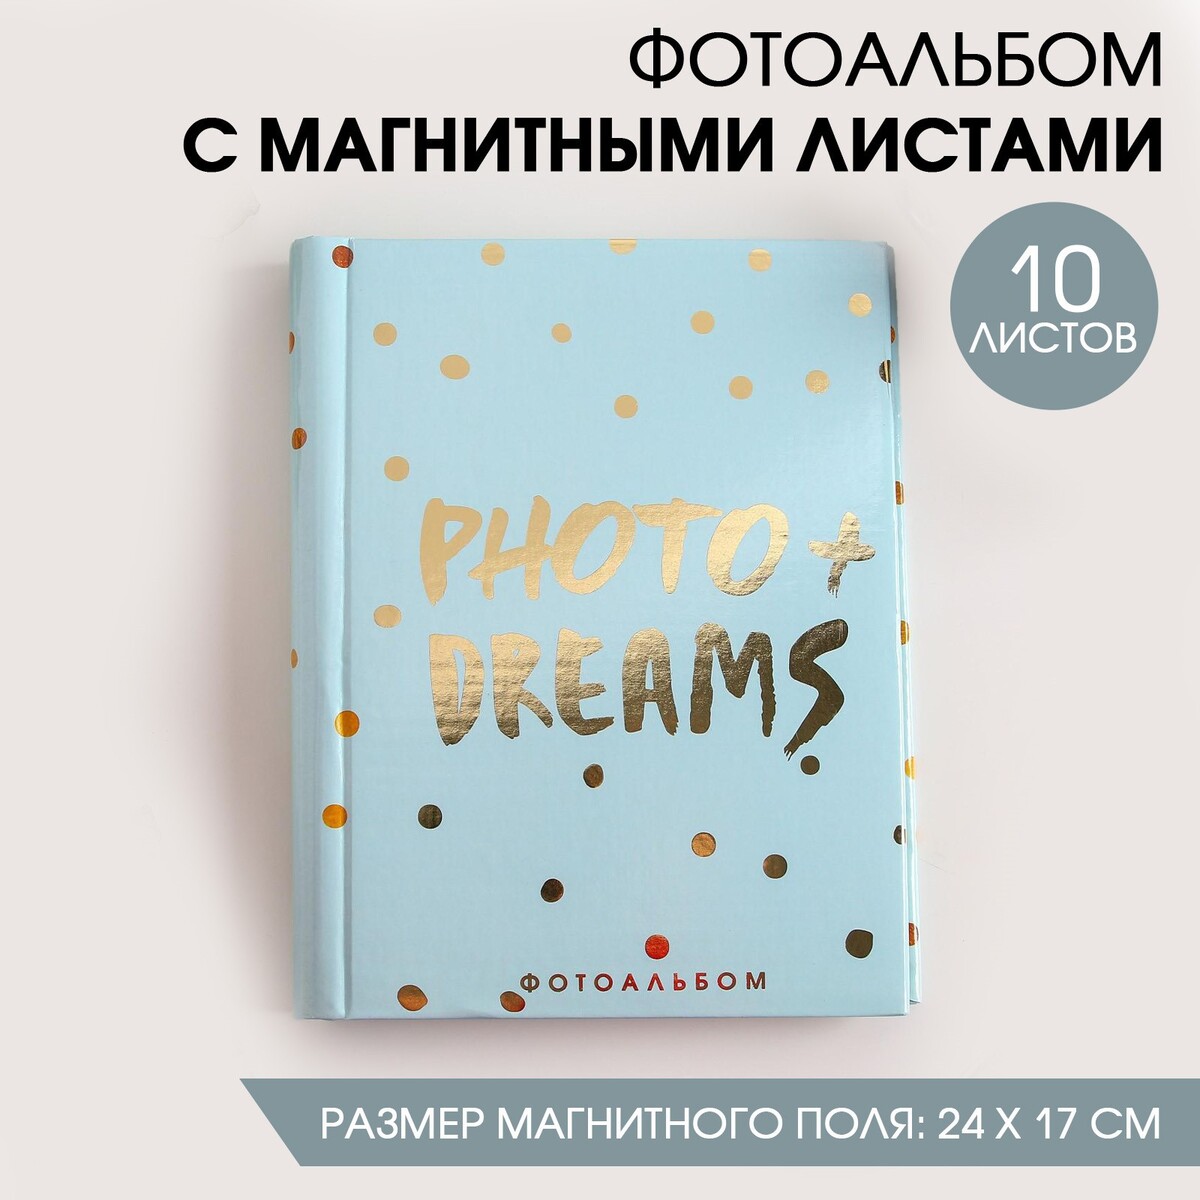 Фотоальбом photo + dreams, 10 магнитных листов фотоальбом 50 магнитных листов 100стр